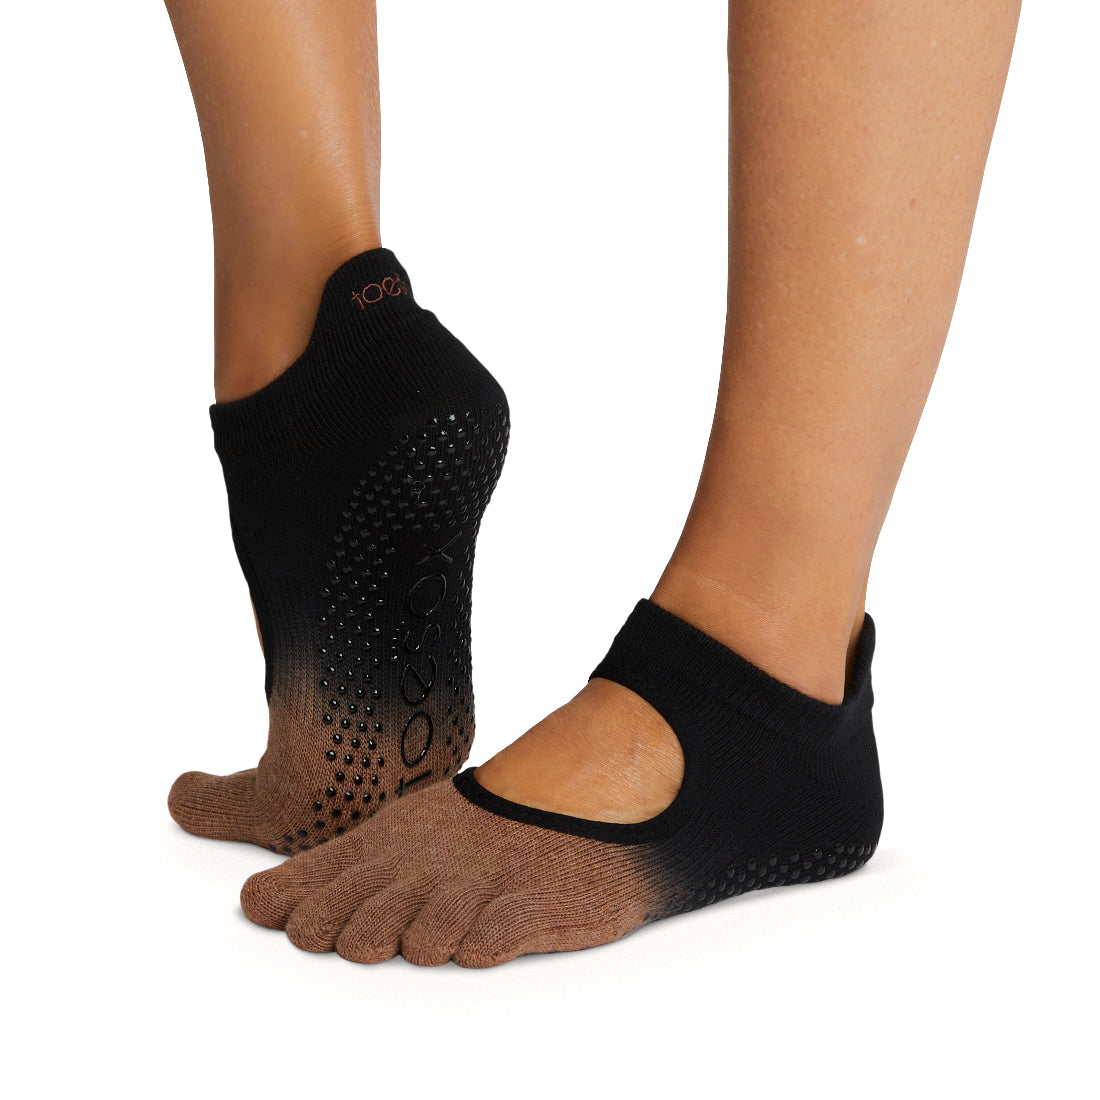 Sole Grip Sticky Grippers Ballet Cross Pilates Socks Yoga Socks